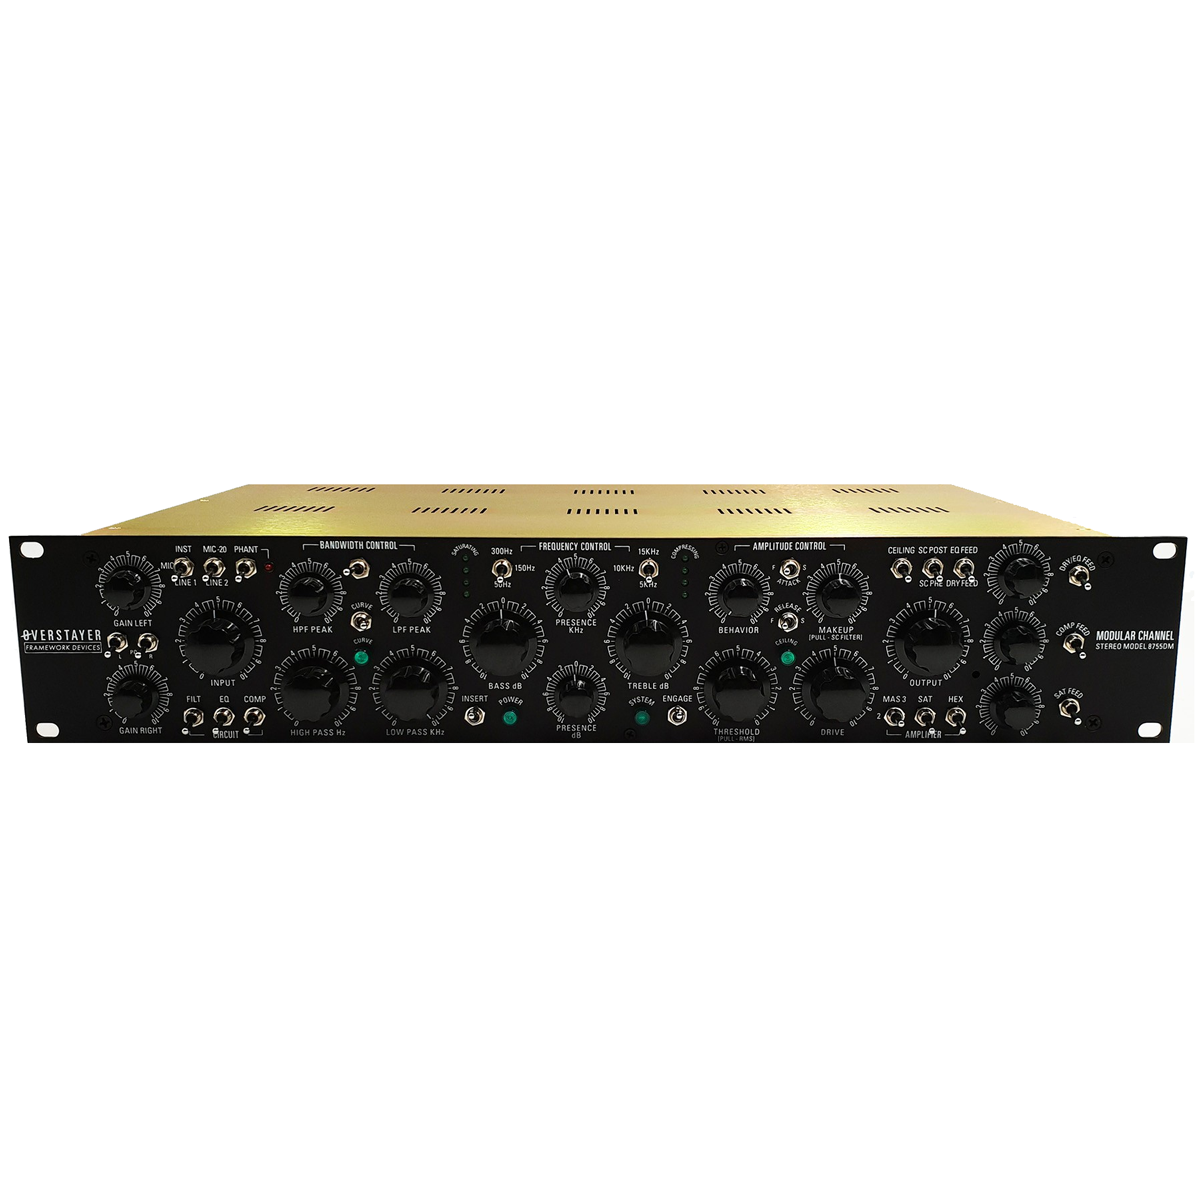 Overstayer Modular Channel Stereo Model 8755DM - Preowned